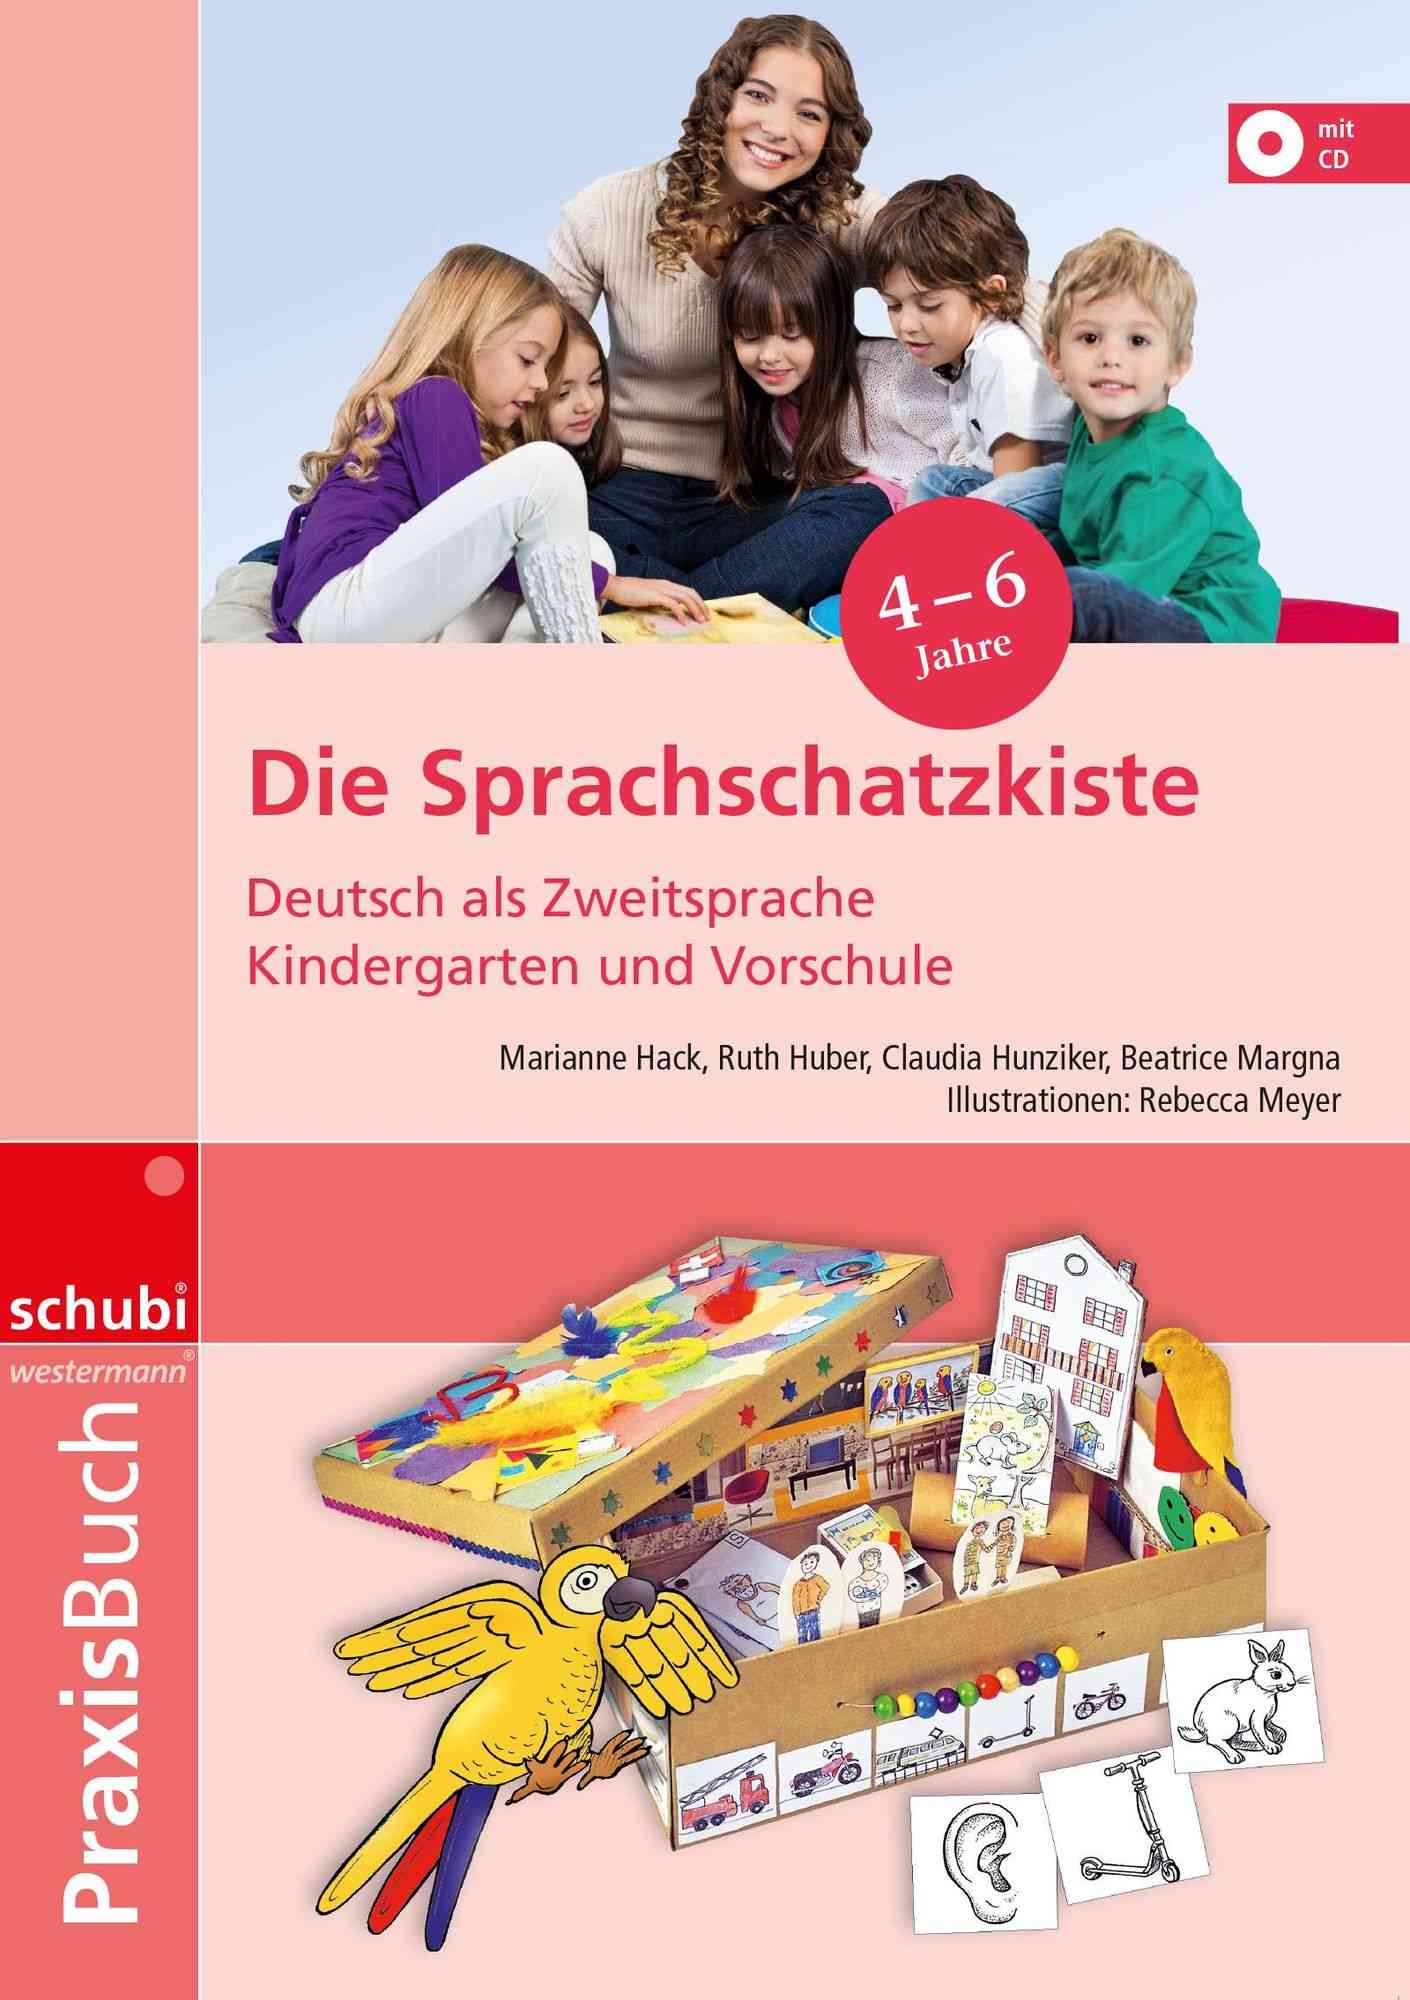 Die Sprachschatzkiste Praxisbuch DaZ, inkl. CD-Rom